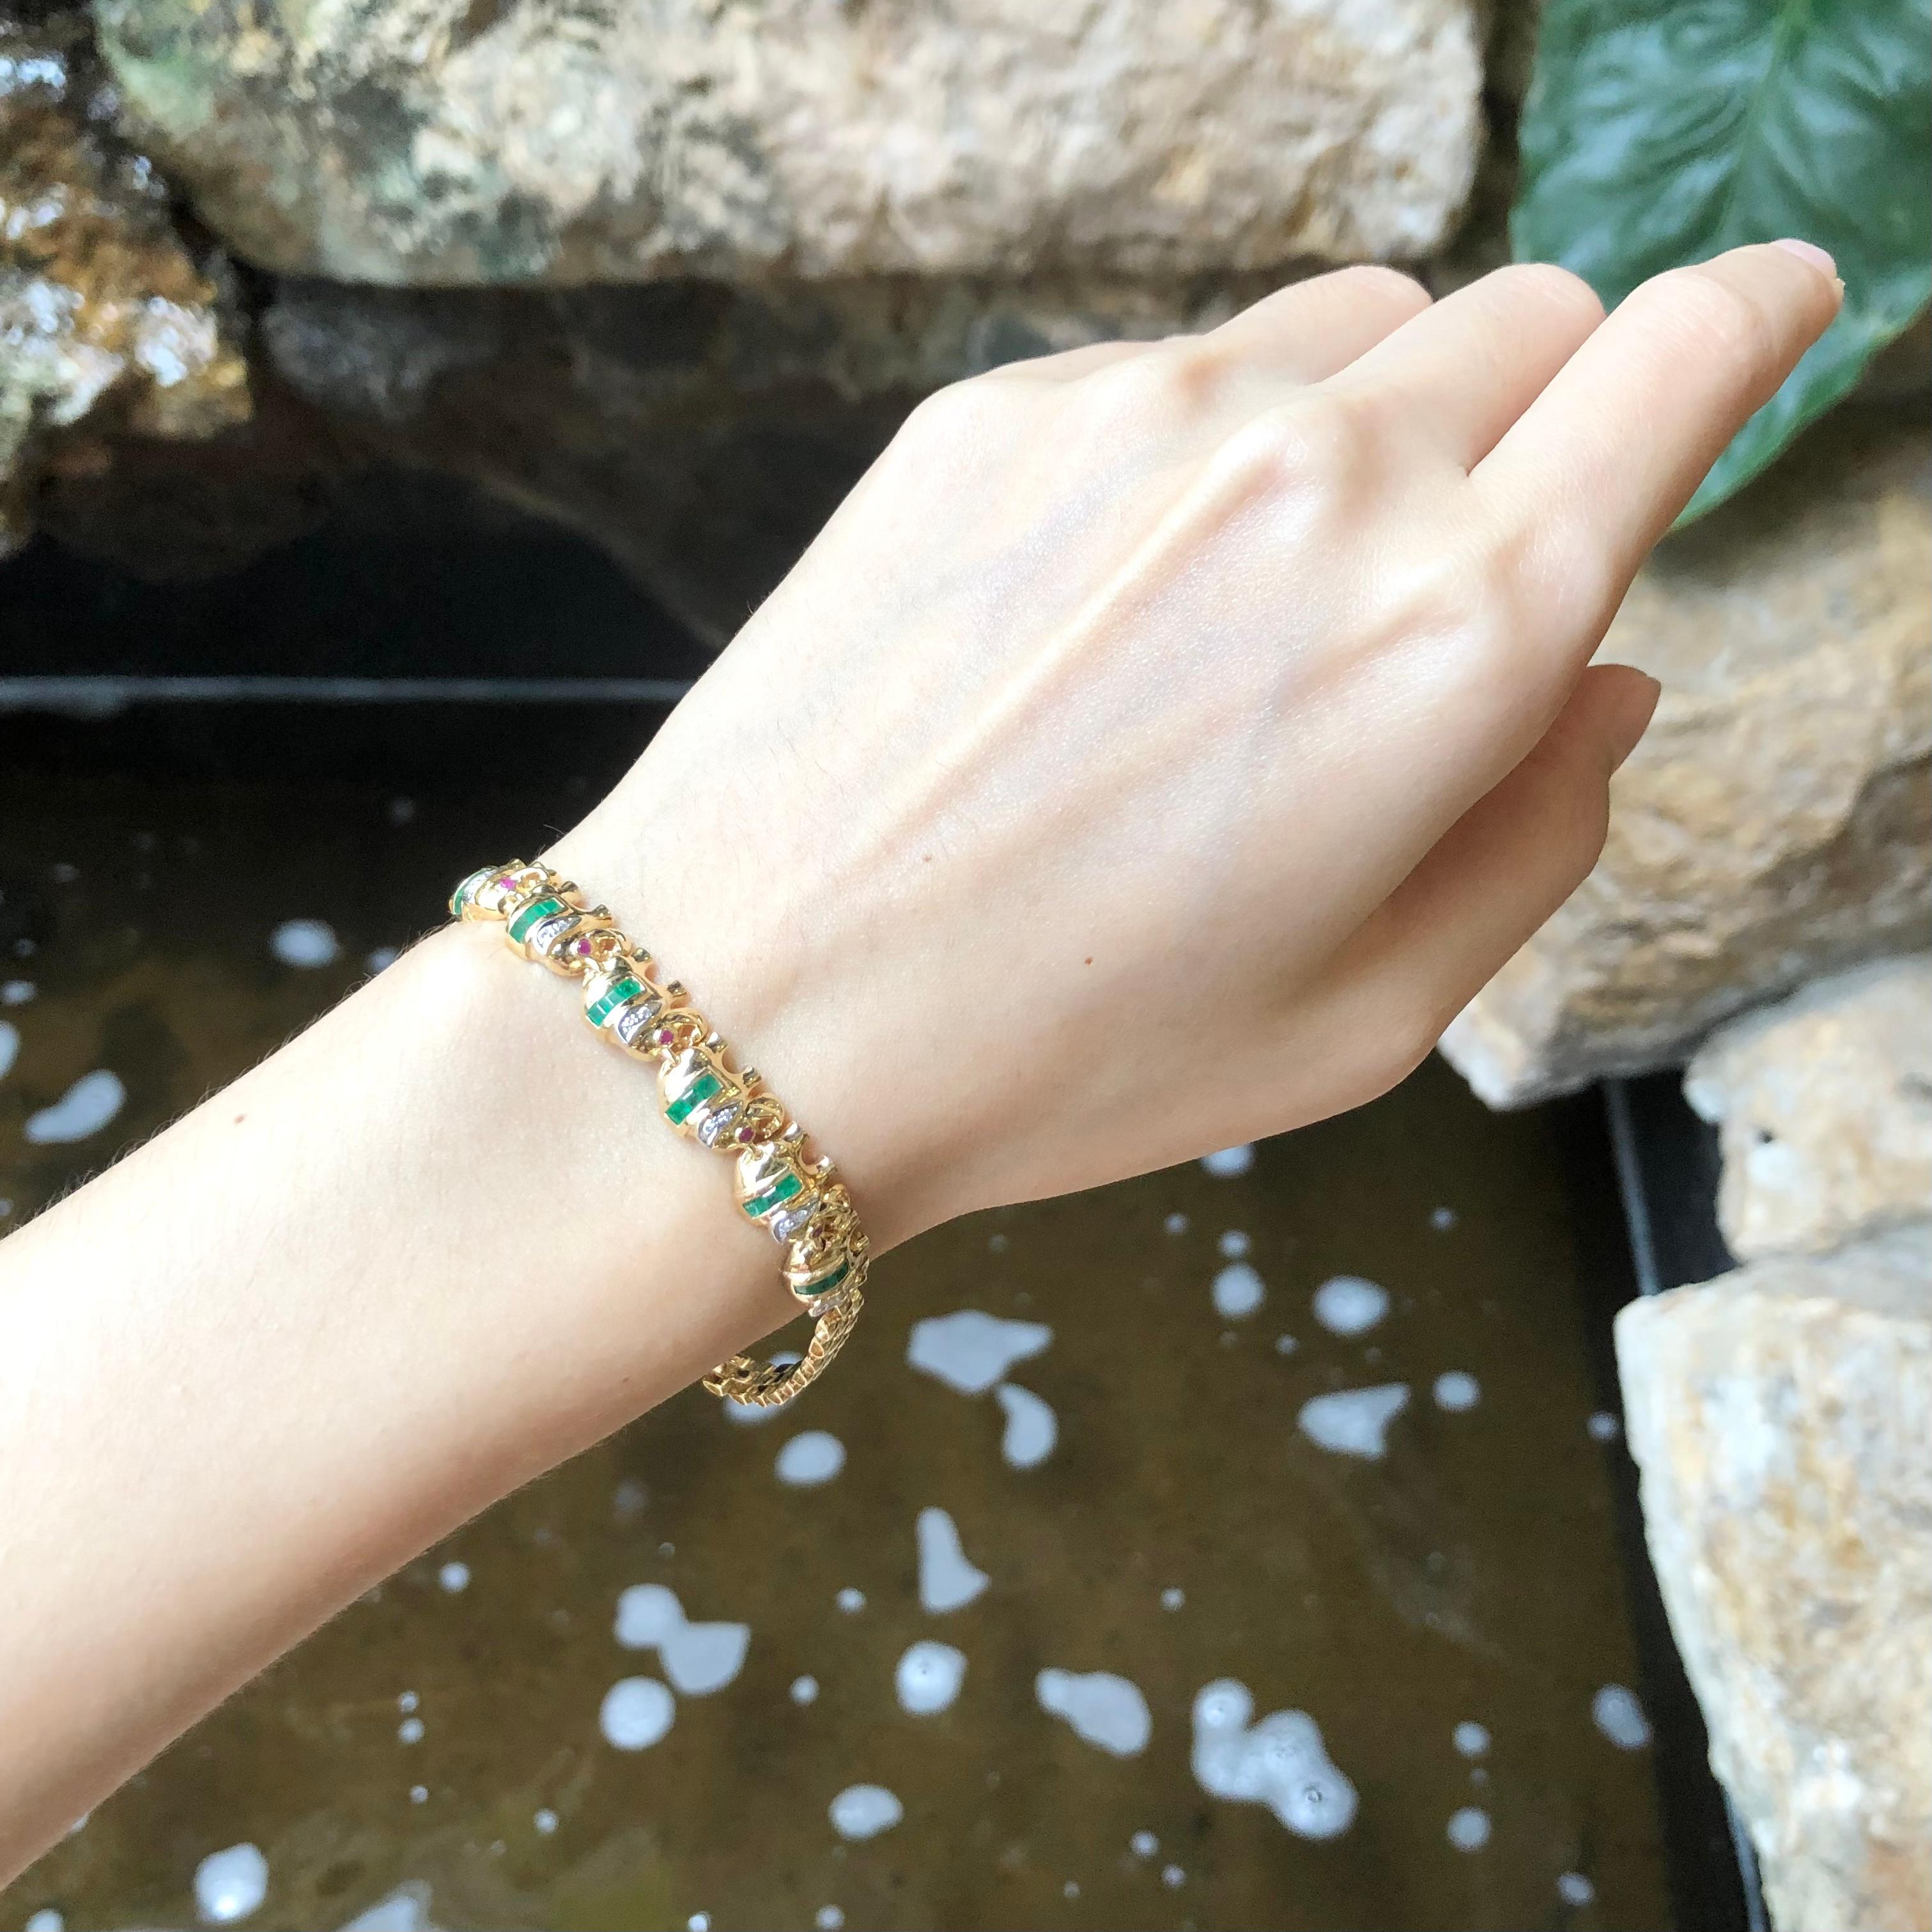 Emerald 0.67 carat with Ruby 0.08 carat Bracelet set in 18 Karat Gold Settings

Width:  0.9 cm 
Length: 18.5 cm
Total Weight: 15.58 grams

